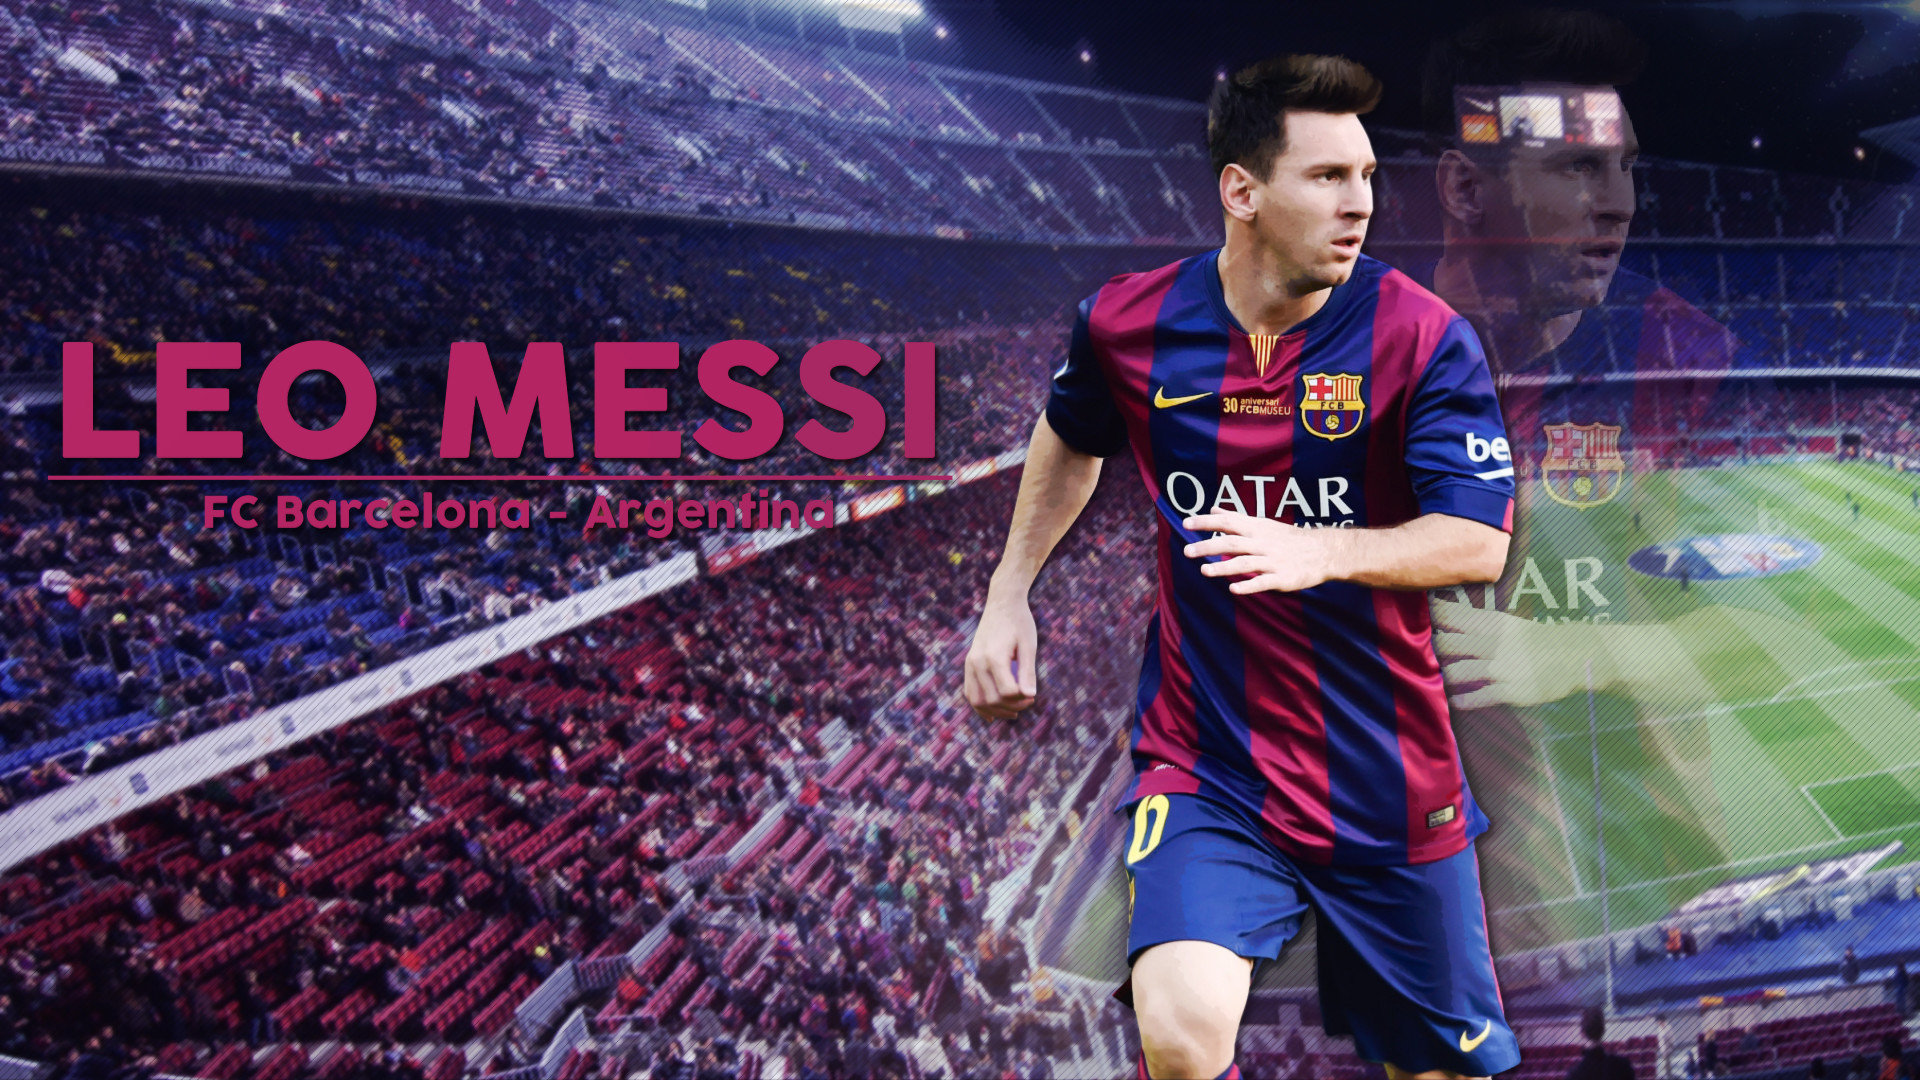 1920x1080 Messi Wallpapers HD Leo Messi wallpaper Barcelona